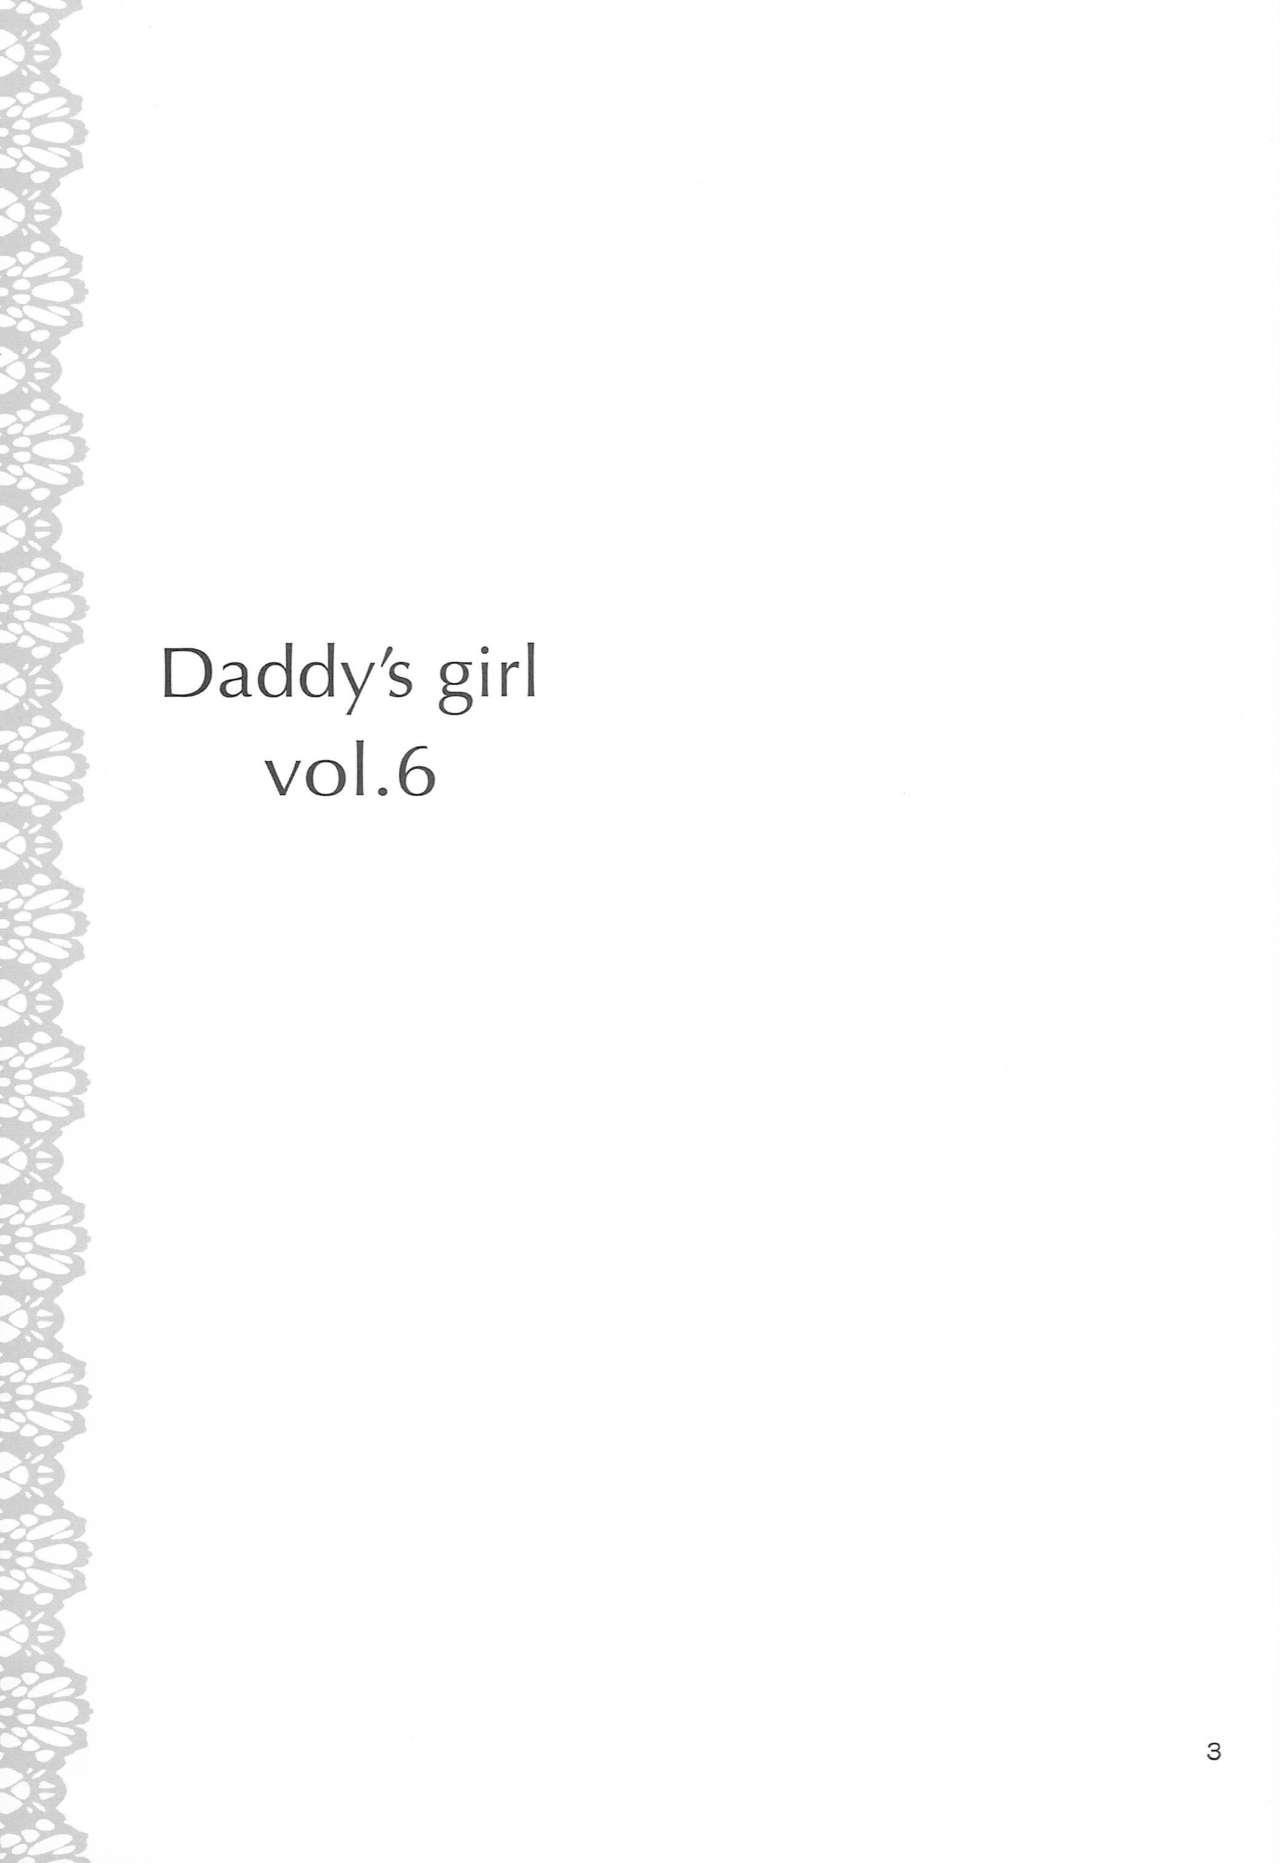 DG - Daddy’s Girl Vol. 6 1